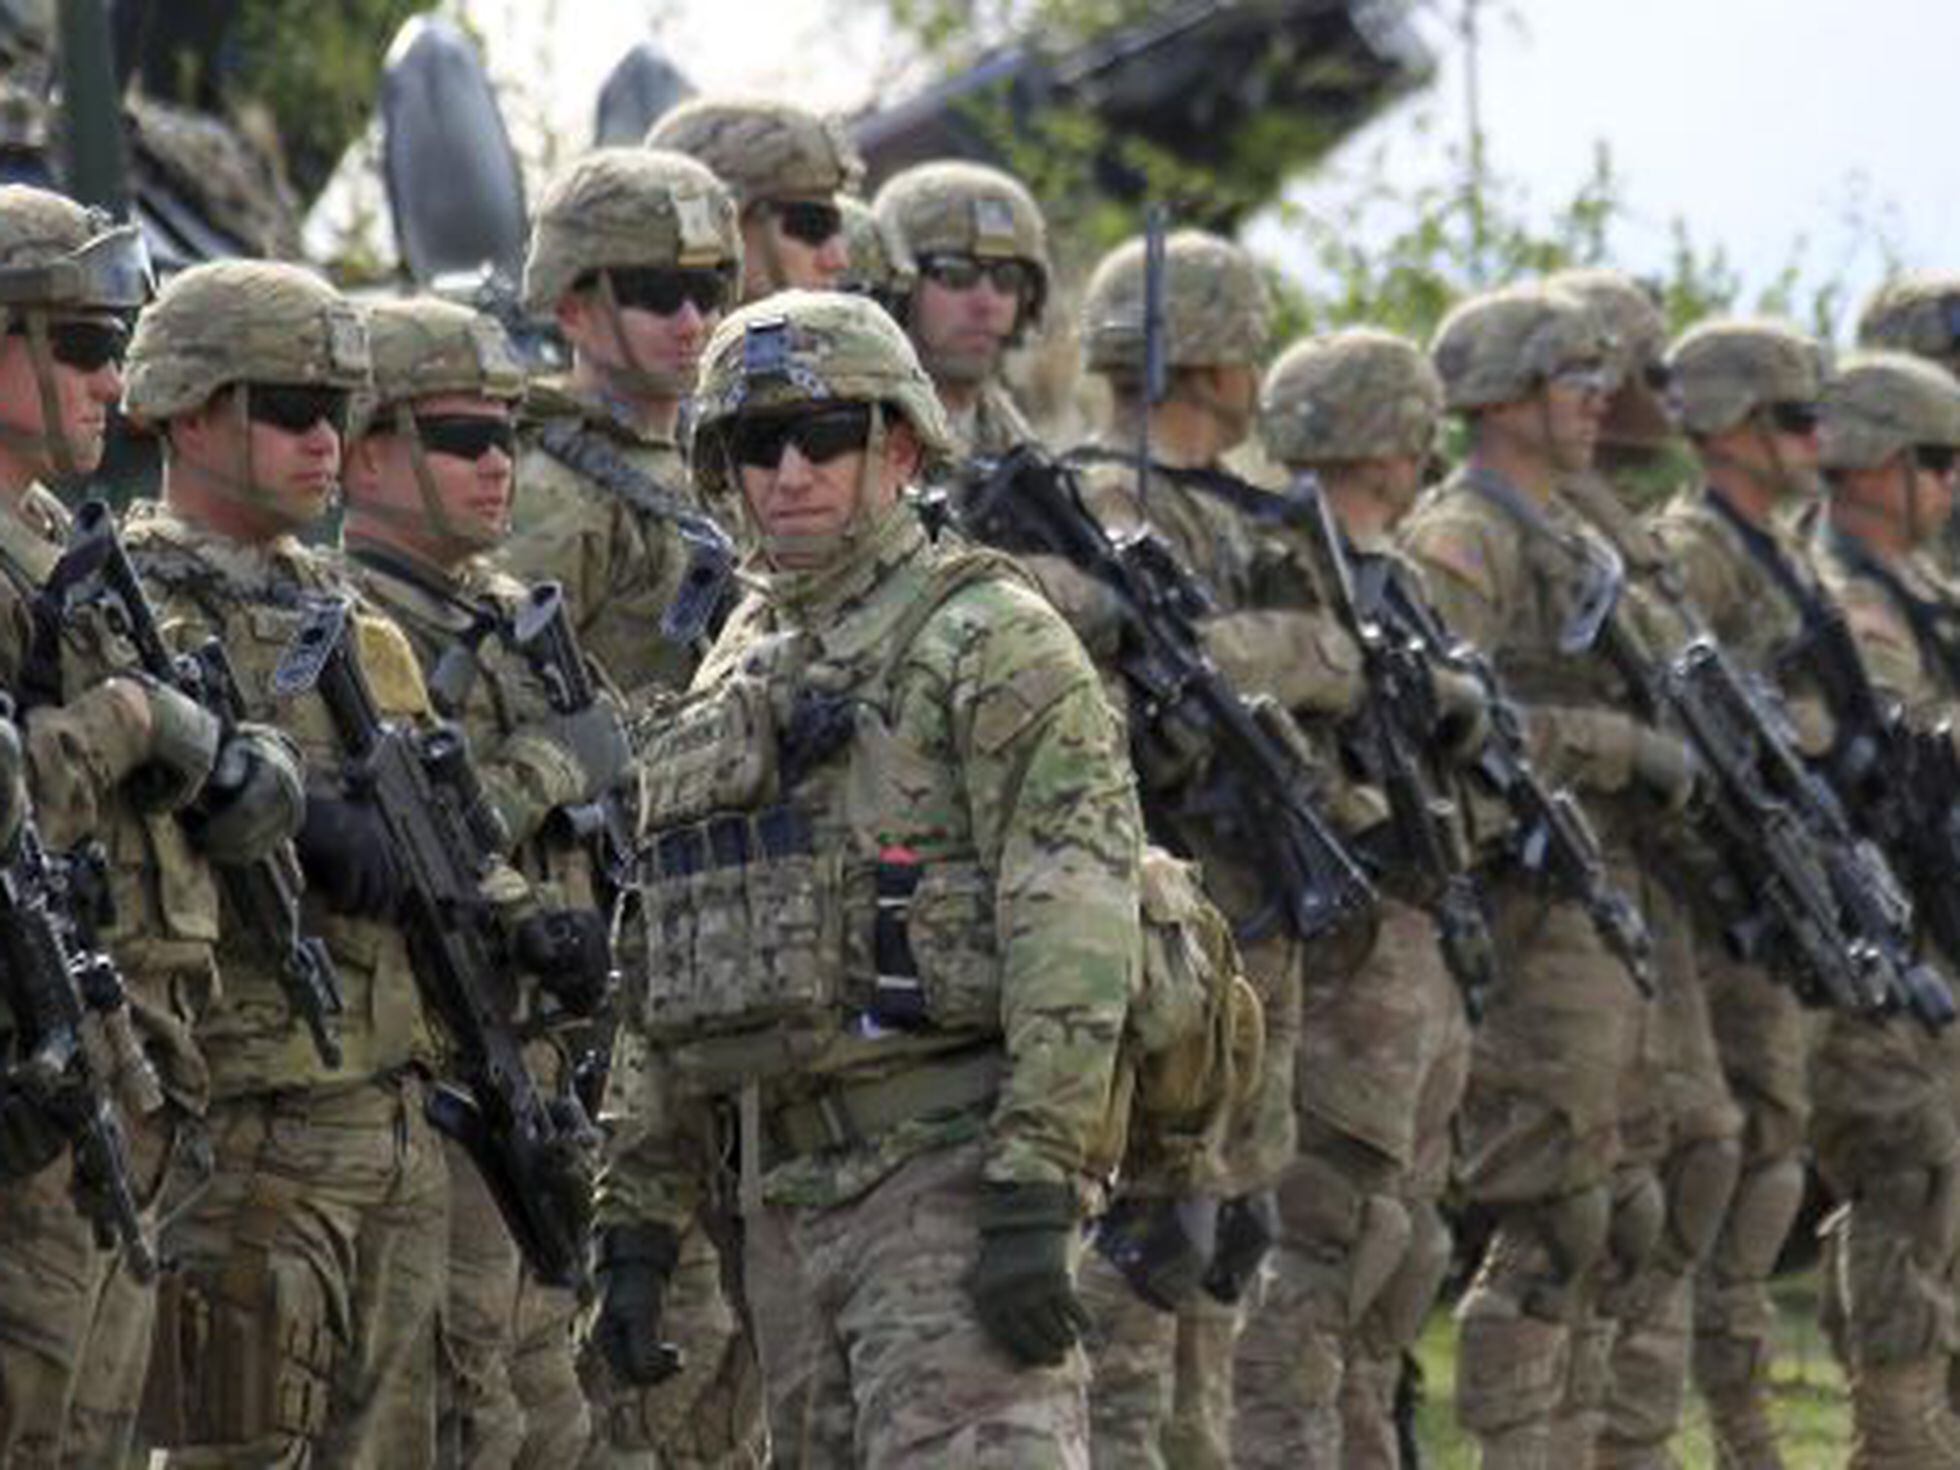 Exército dos EUA participará de exercício militar inédito na